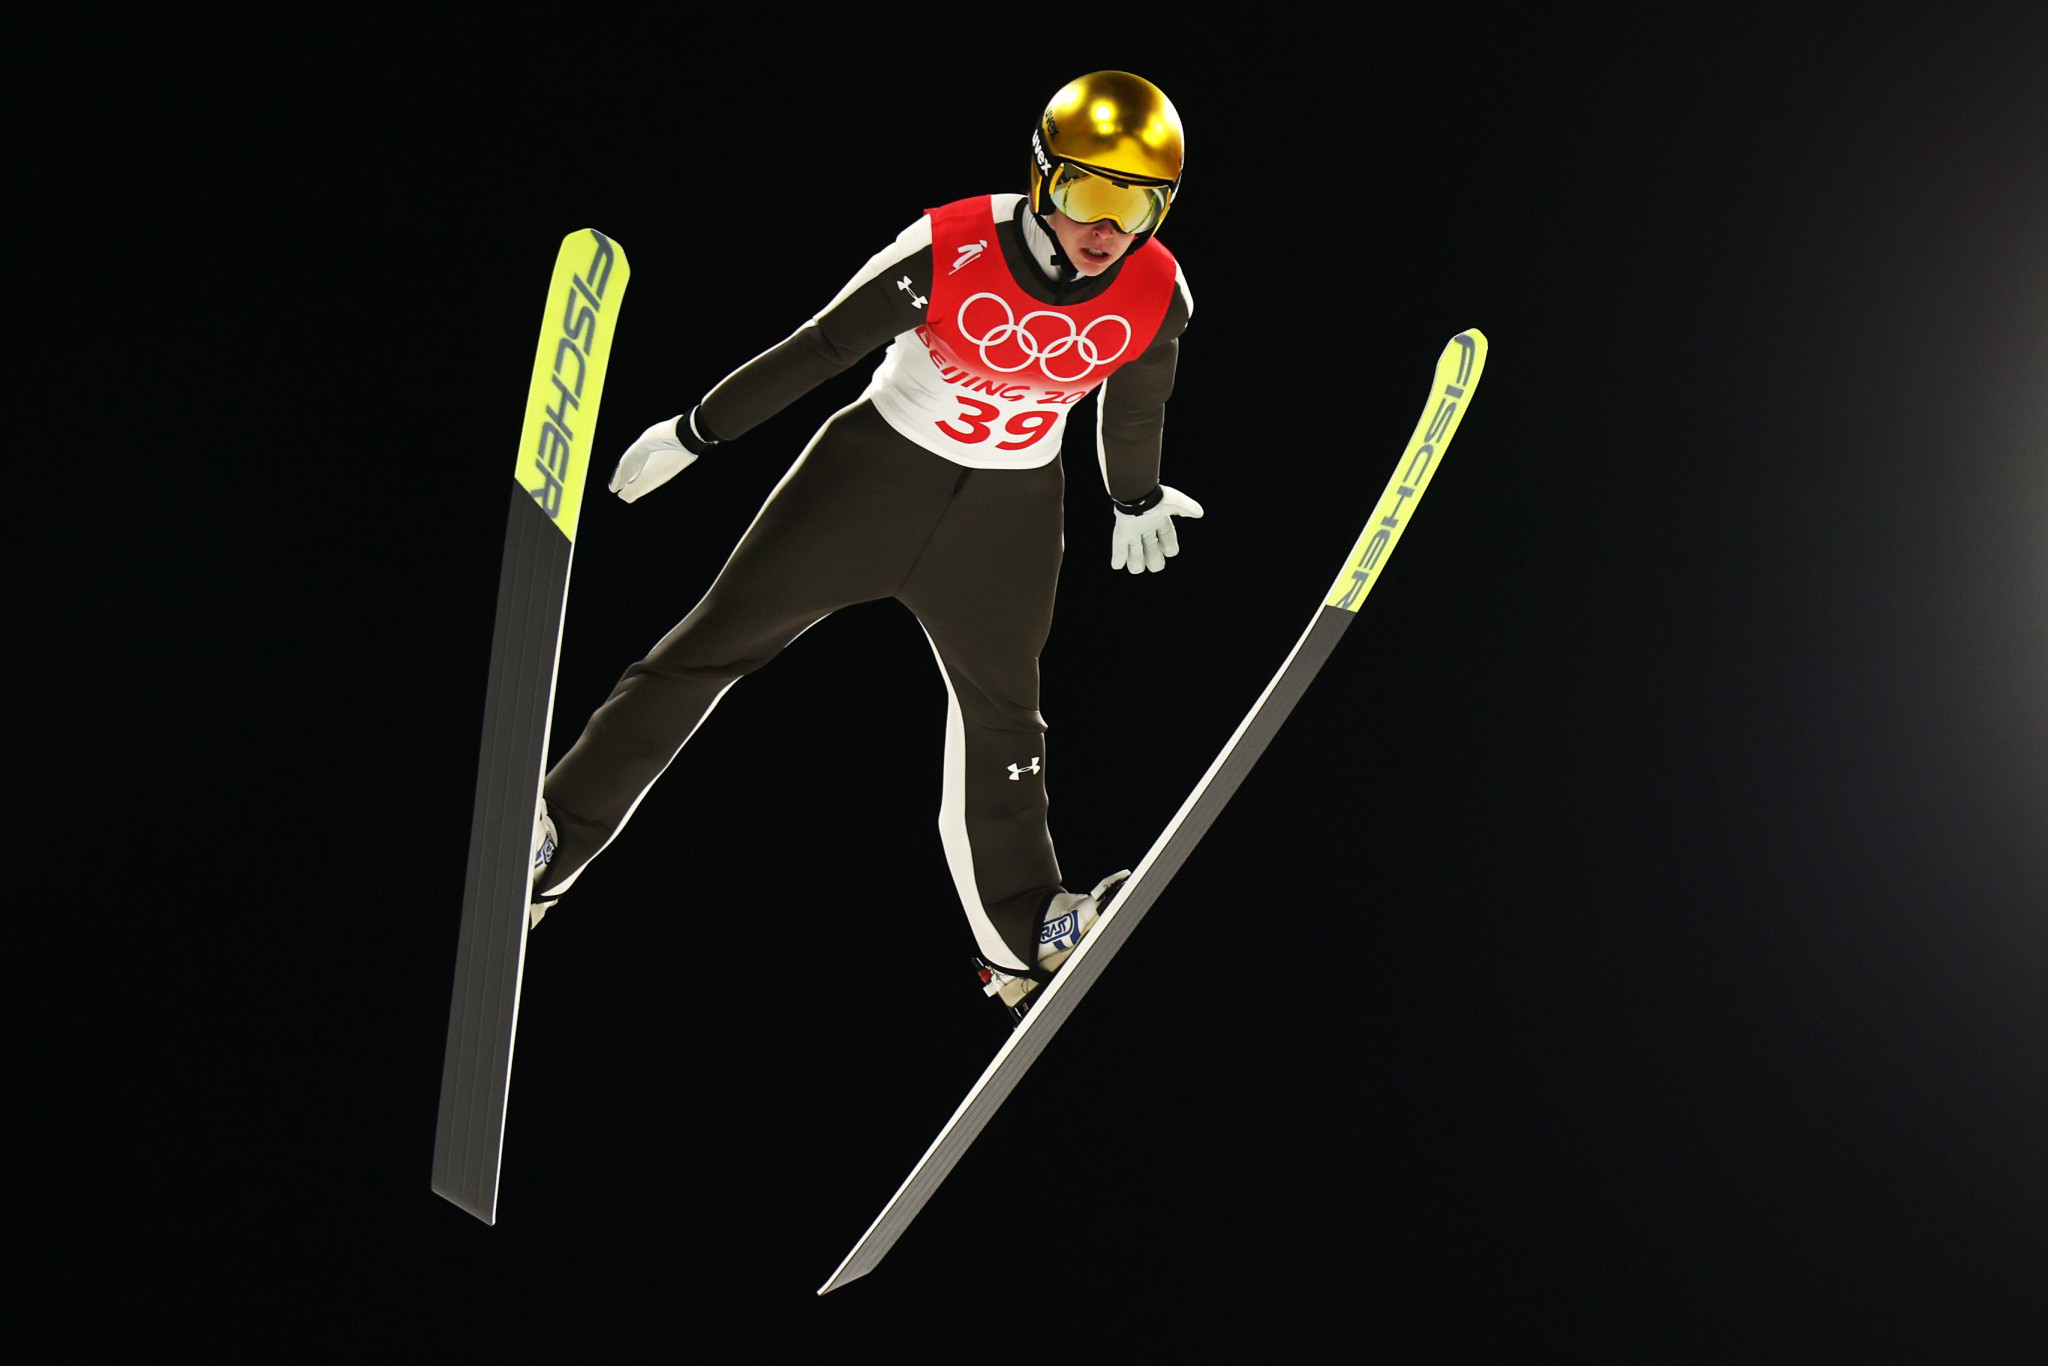 Slovenia’s Urša Bogataj bagged gold in the women's normal hill ski jumping ©Getty Images